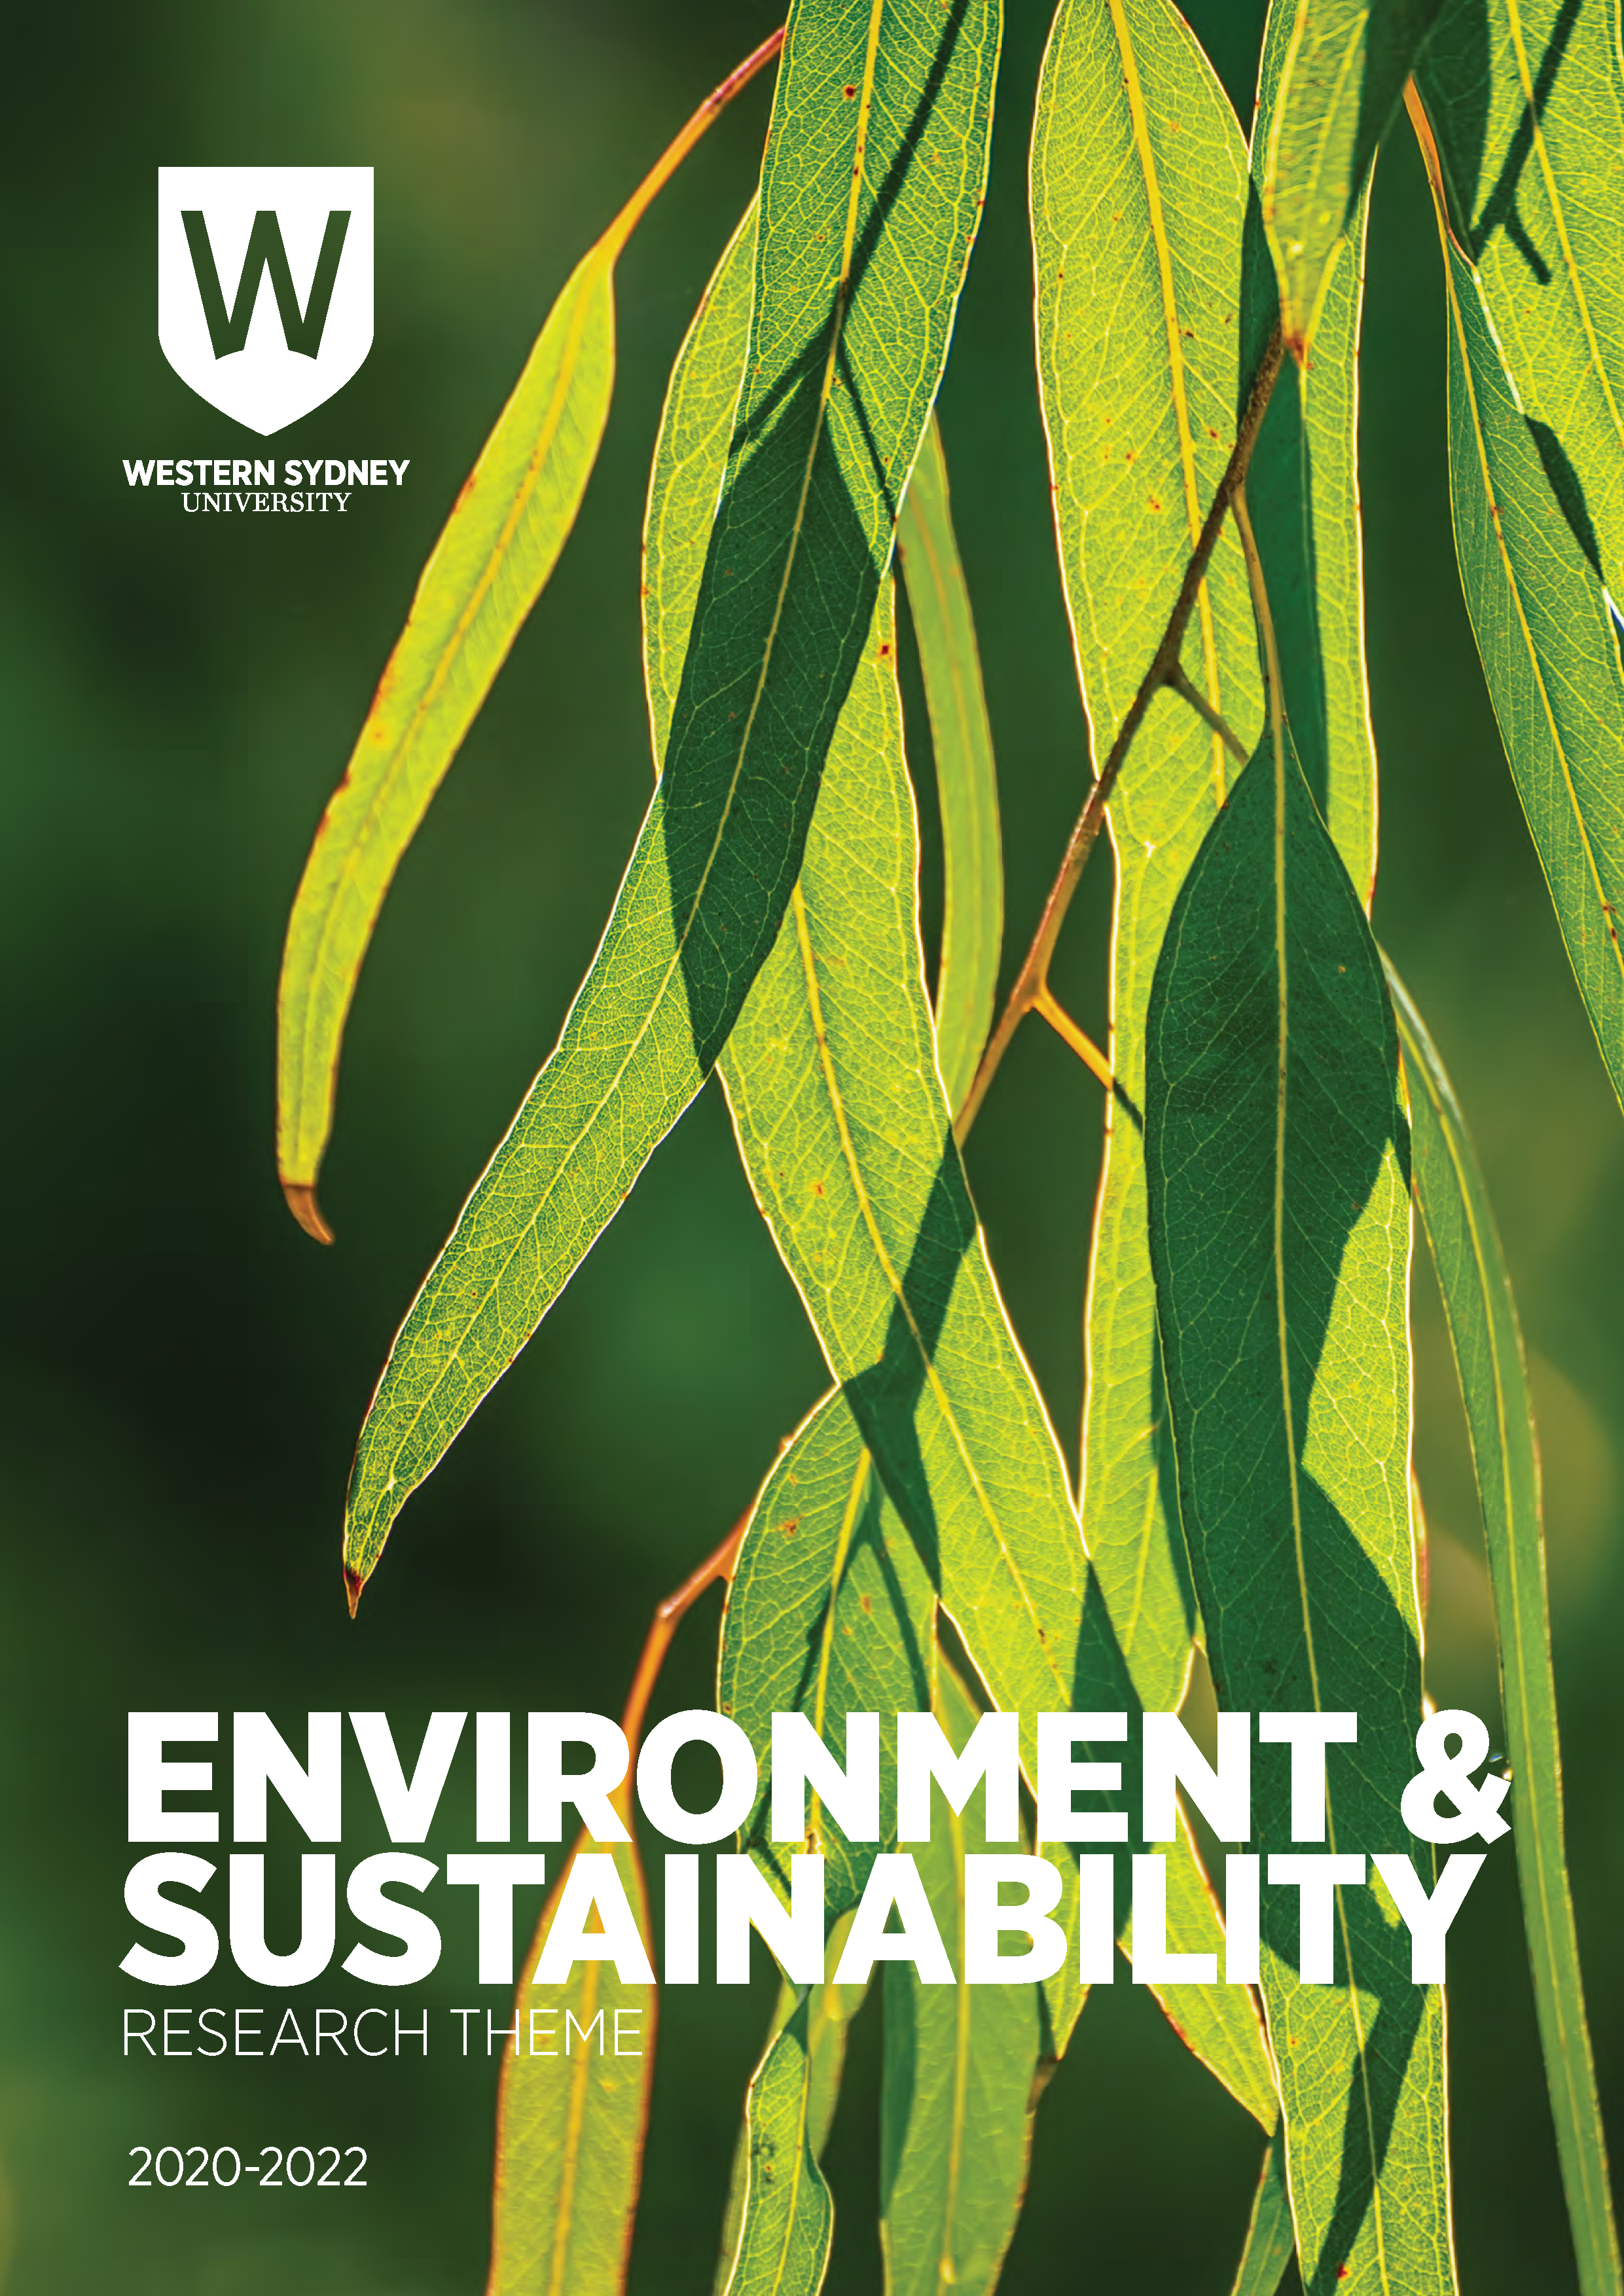 Environment & Sustainability 2020-2022 Report